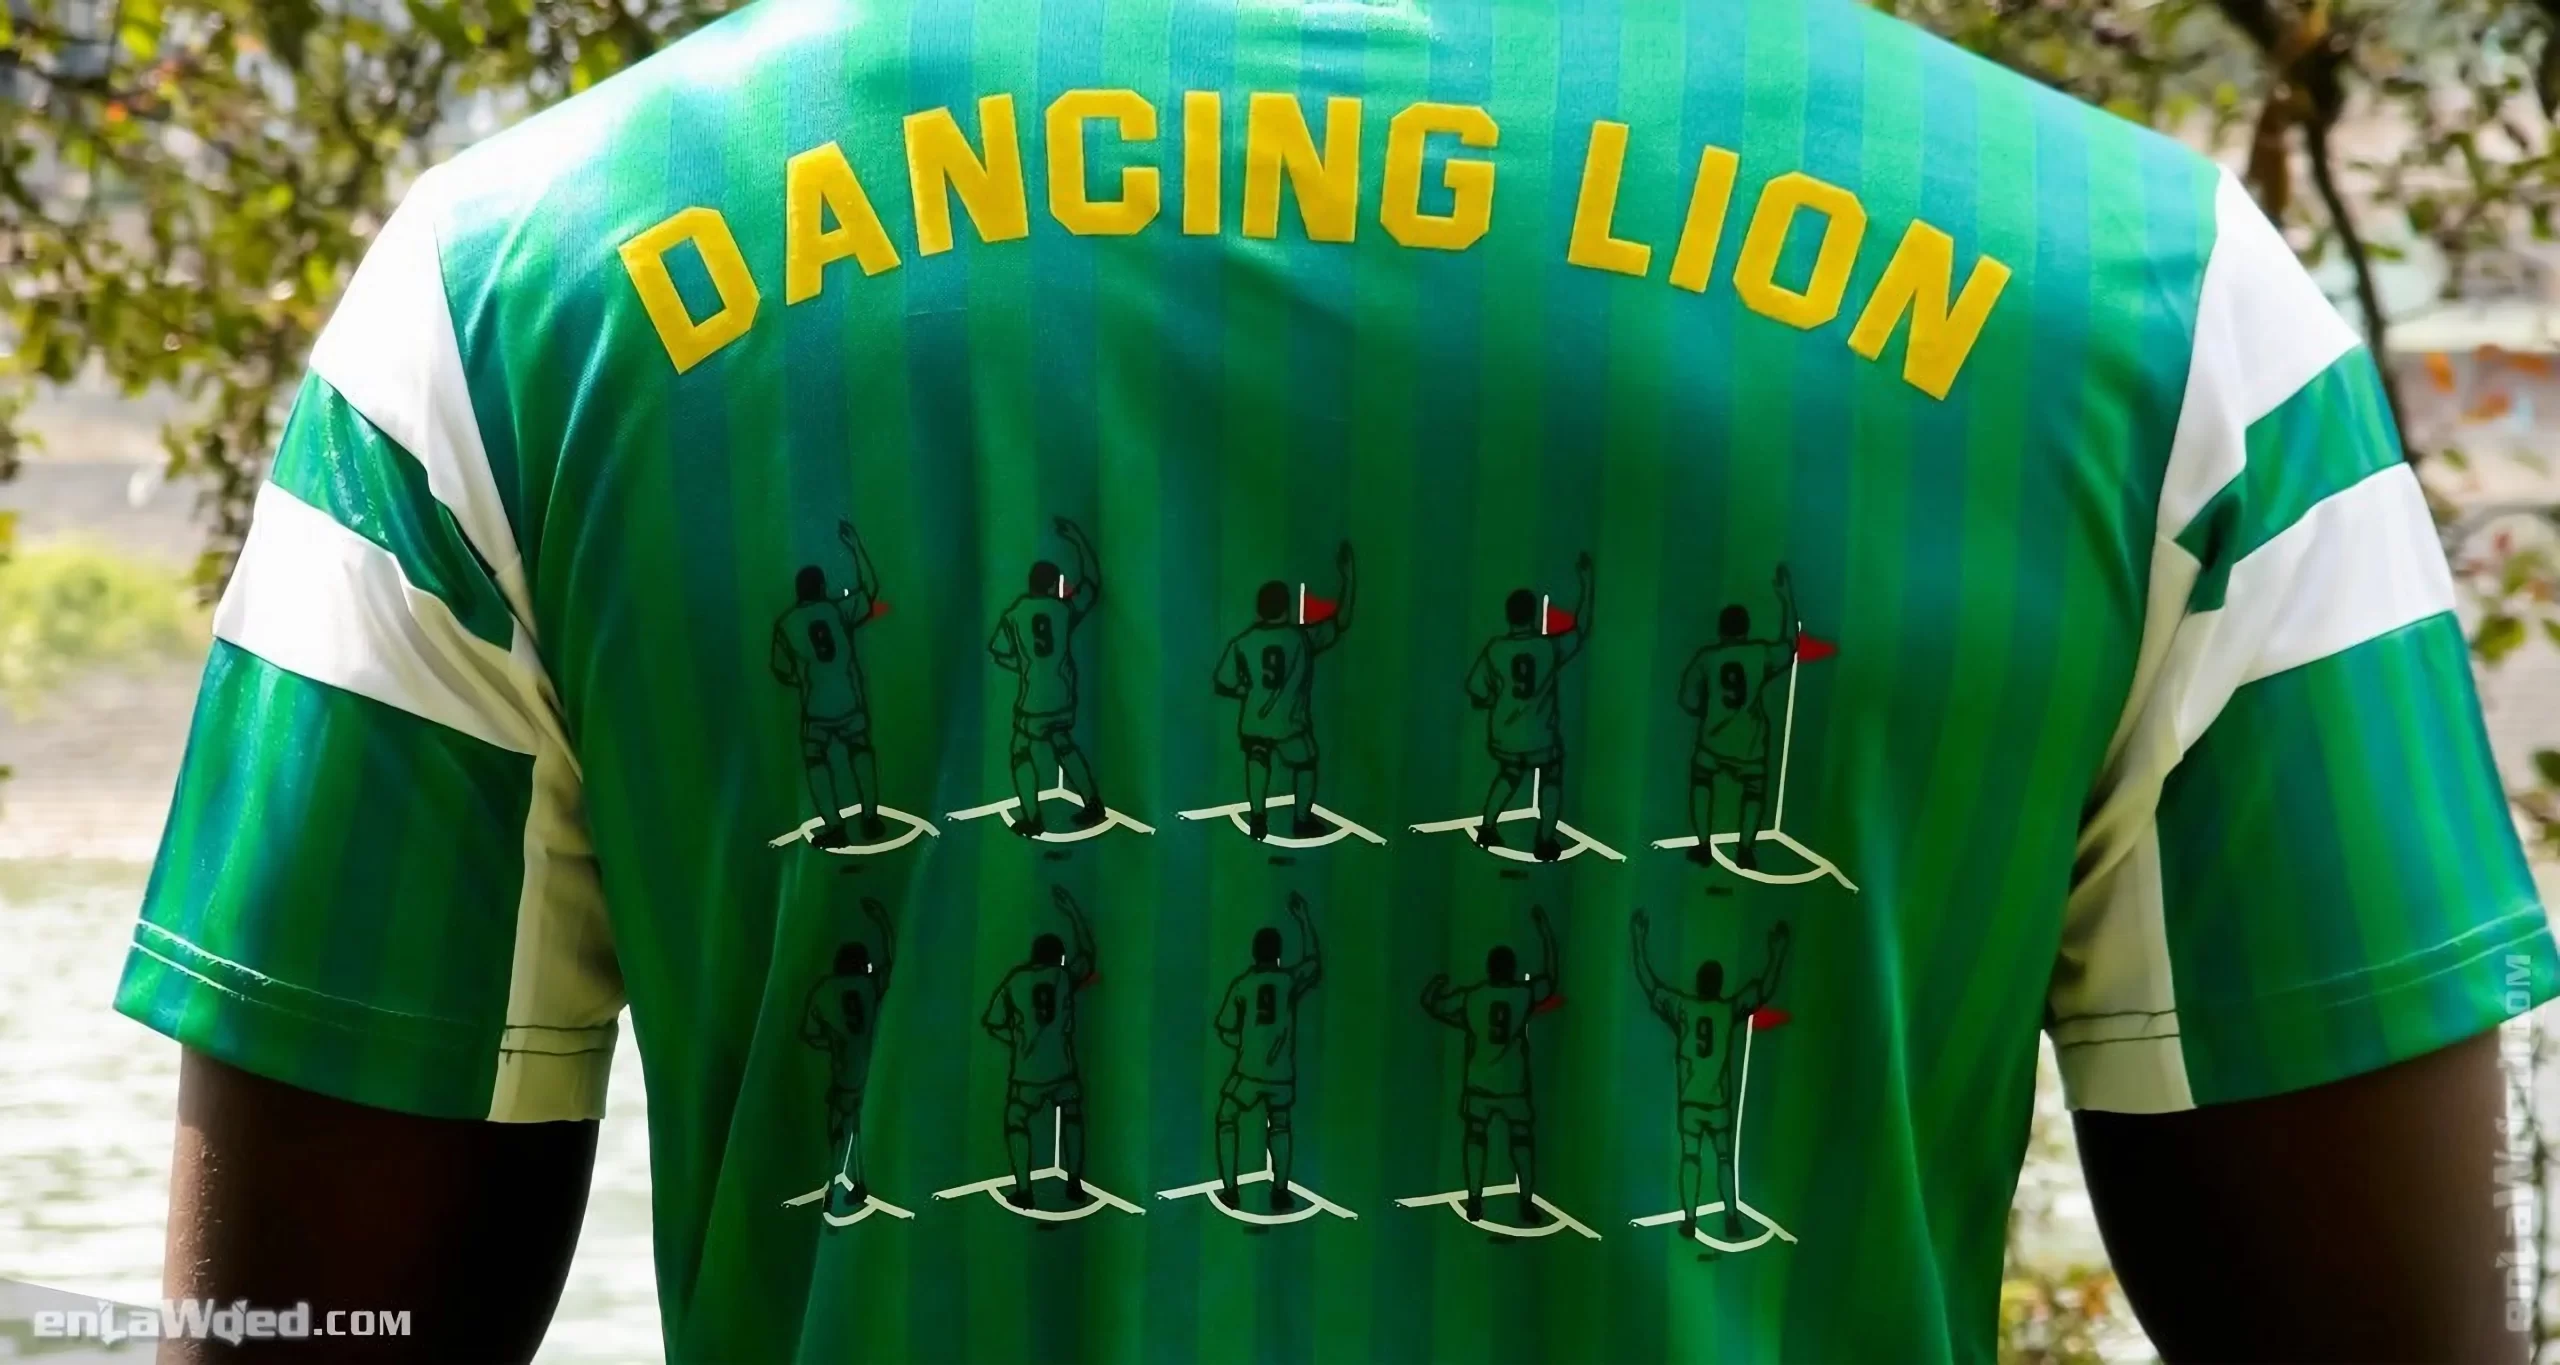 Men's 2006 Cameroon '90 Dancing Lion Jersey by Adidas: Intelligent (EnLawded.com file #lmchk90485ip2y122993kg9st)